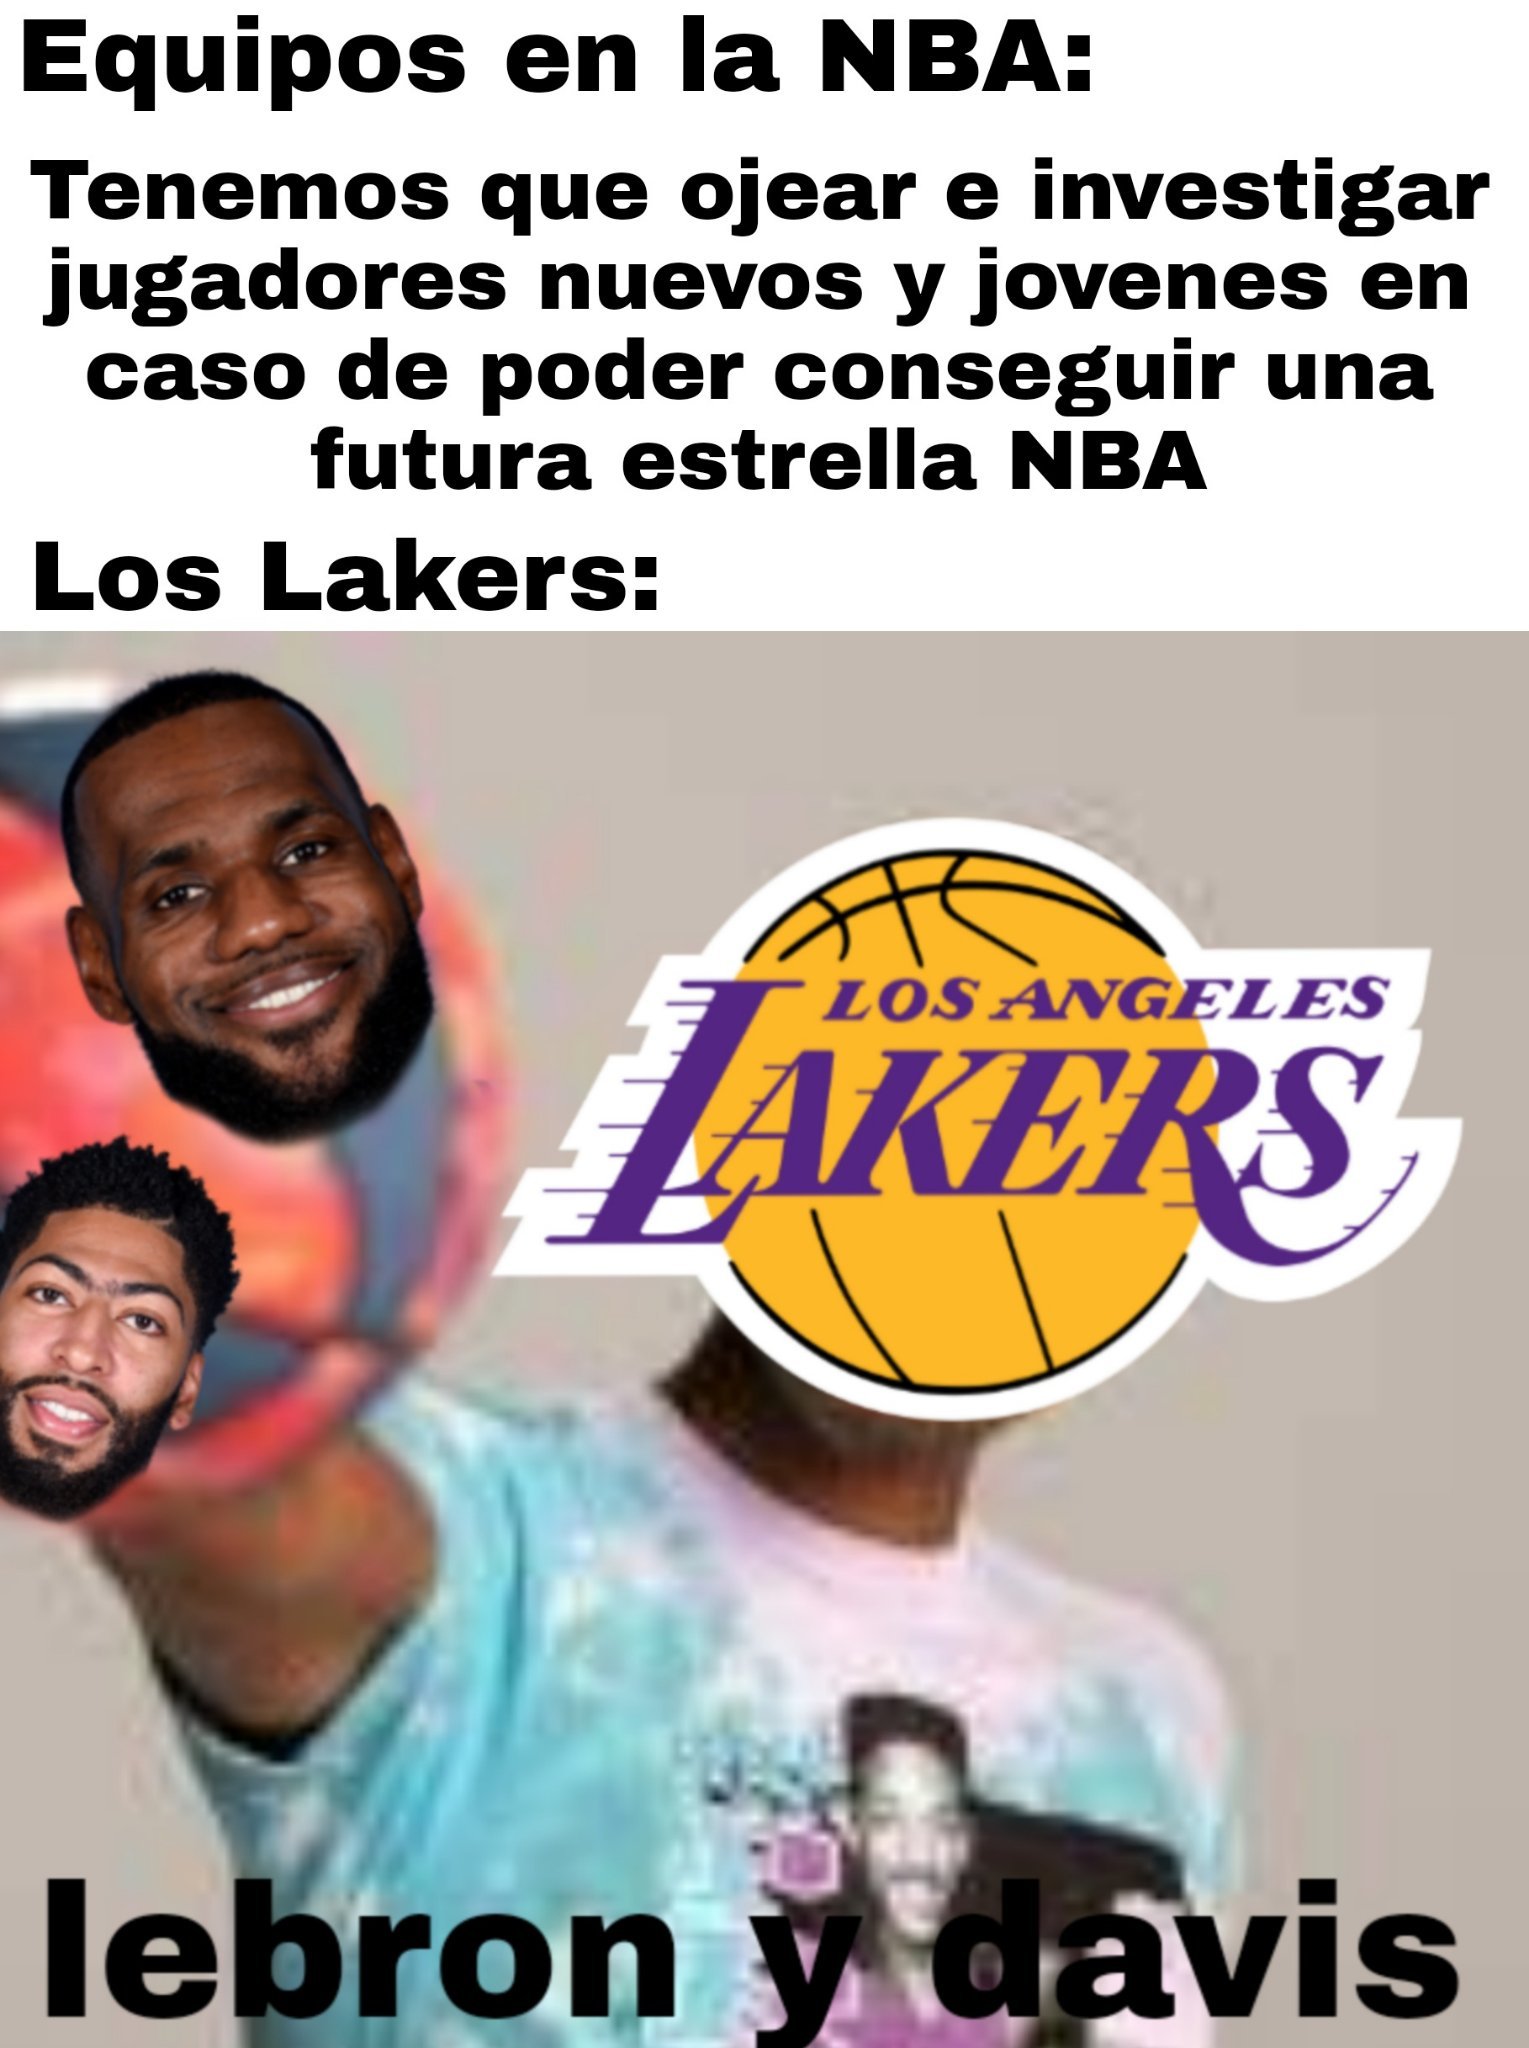 Resúmen de los Lakers actuales. - meme